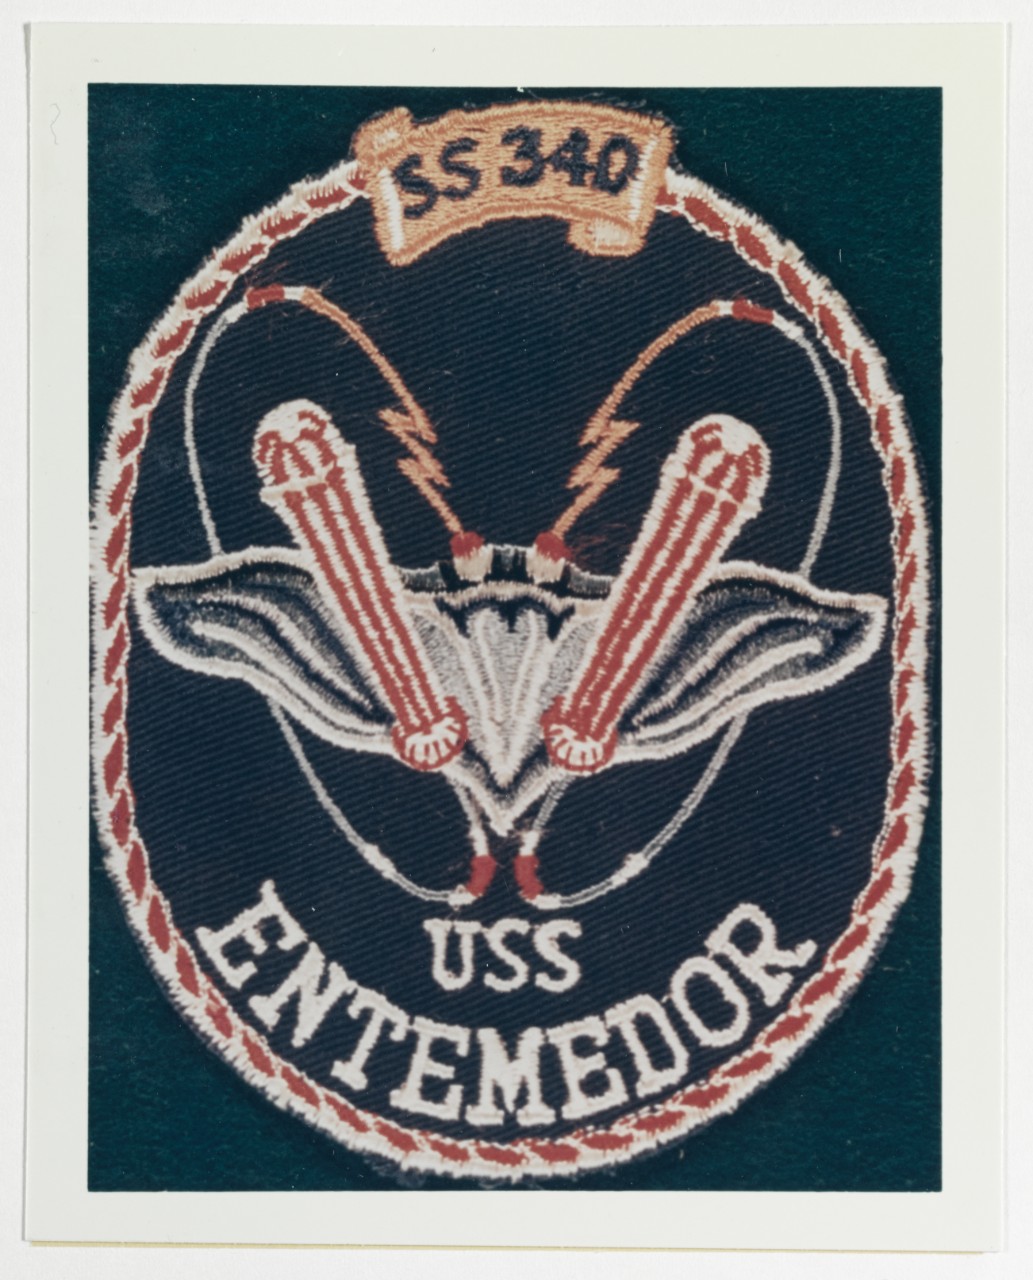 Insignia: USS ENTEMEDOR (SS-340)